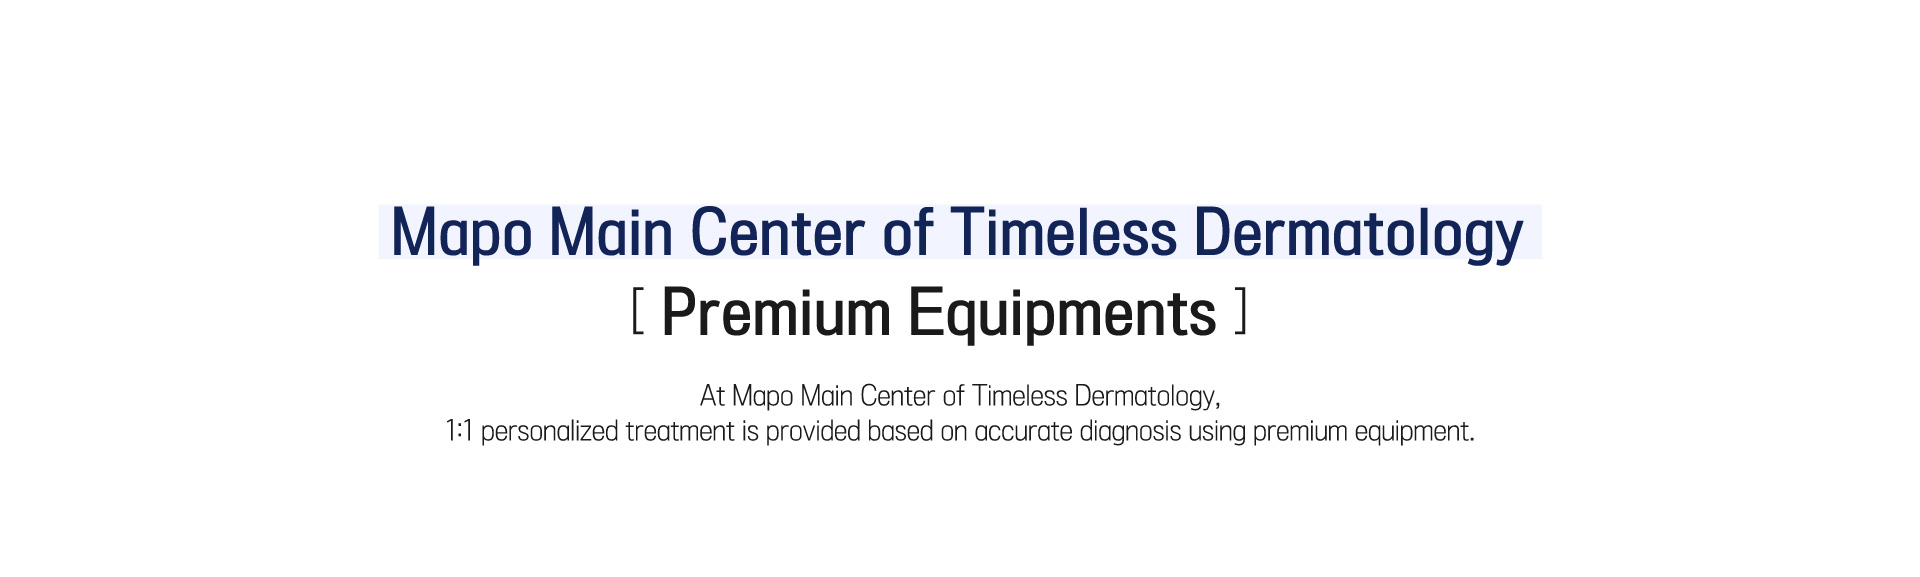 Timeless cermatologic clinic's premium equipment